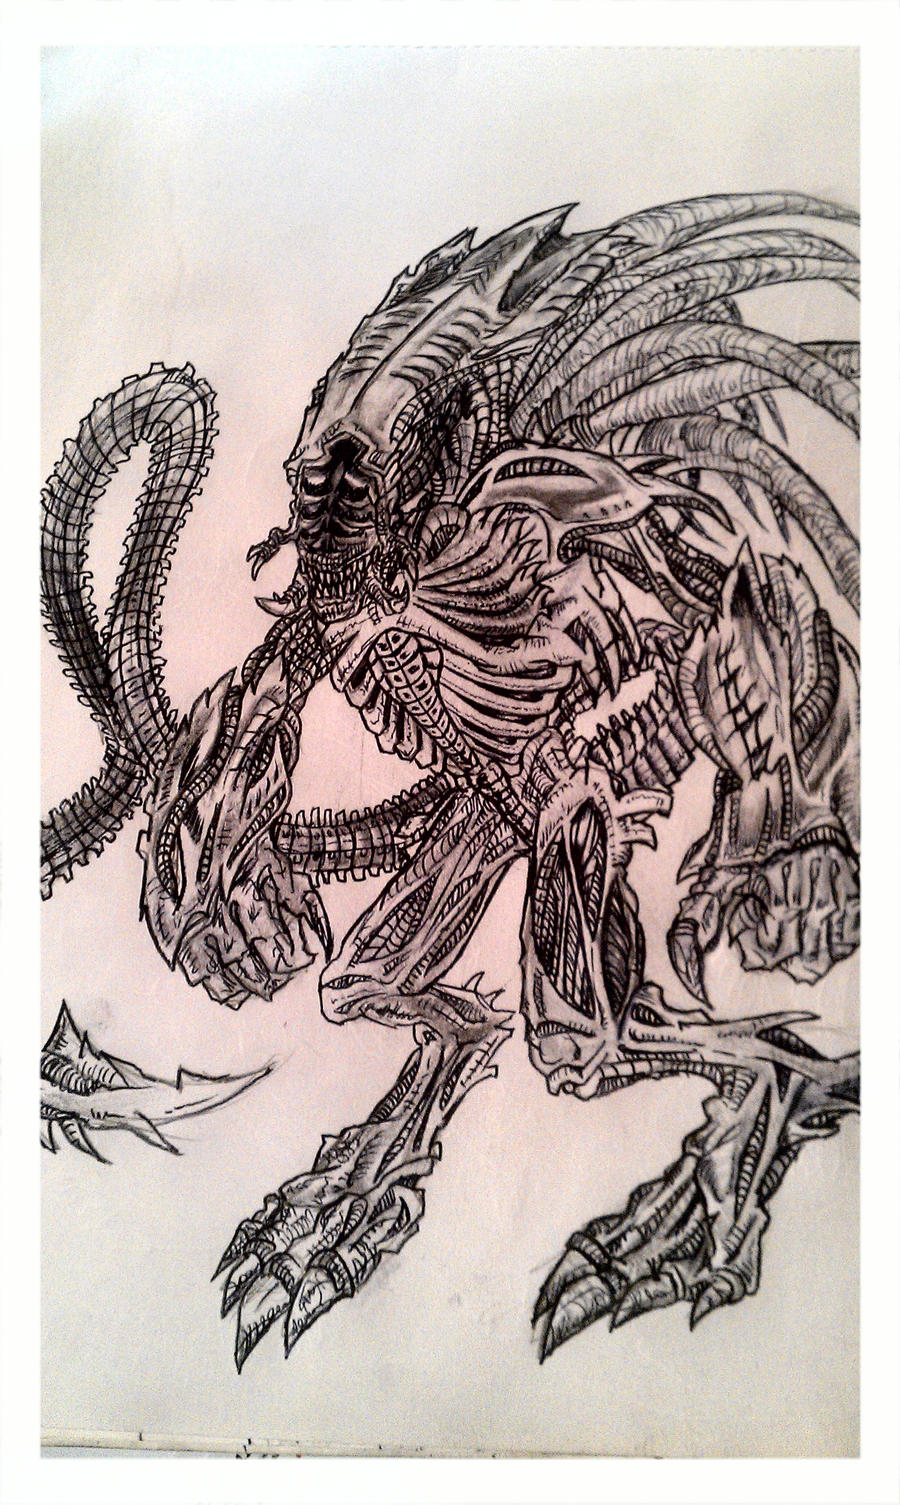 aliens vs predator concept art by matthew3hyde on DeviantArt